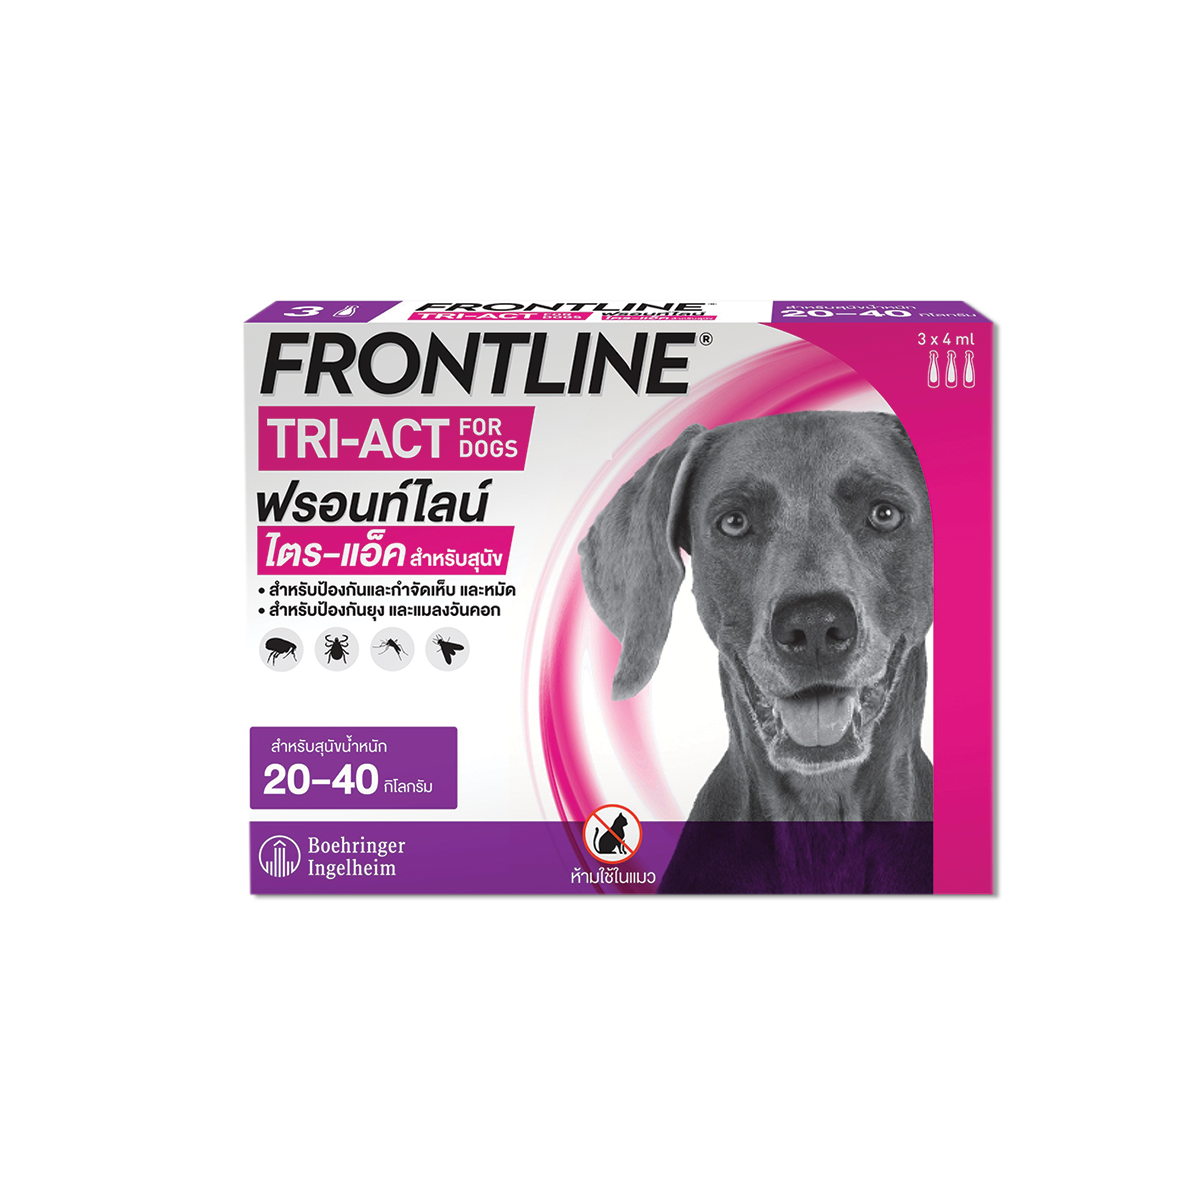 Frontline Tri-Act for Dog Size L ฟรอนท์ไลน์ ไตร-แอ็ค สำหรับสุนัข น้ำหนัก 20-40 กิโลกรัม